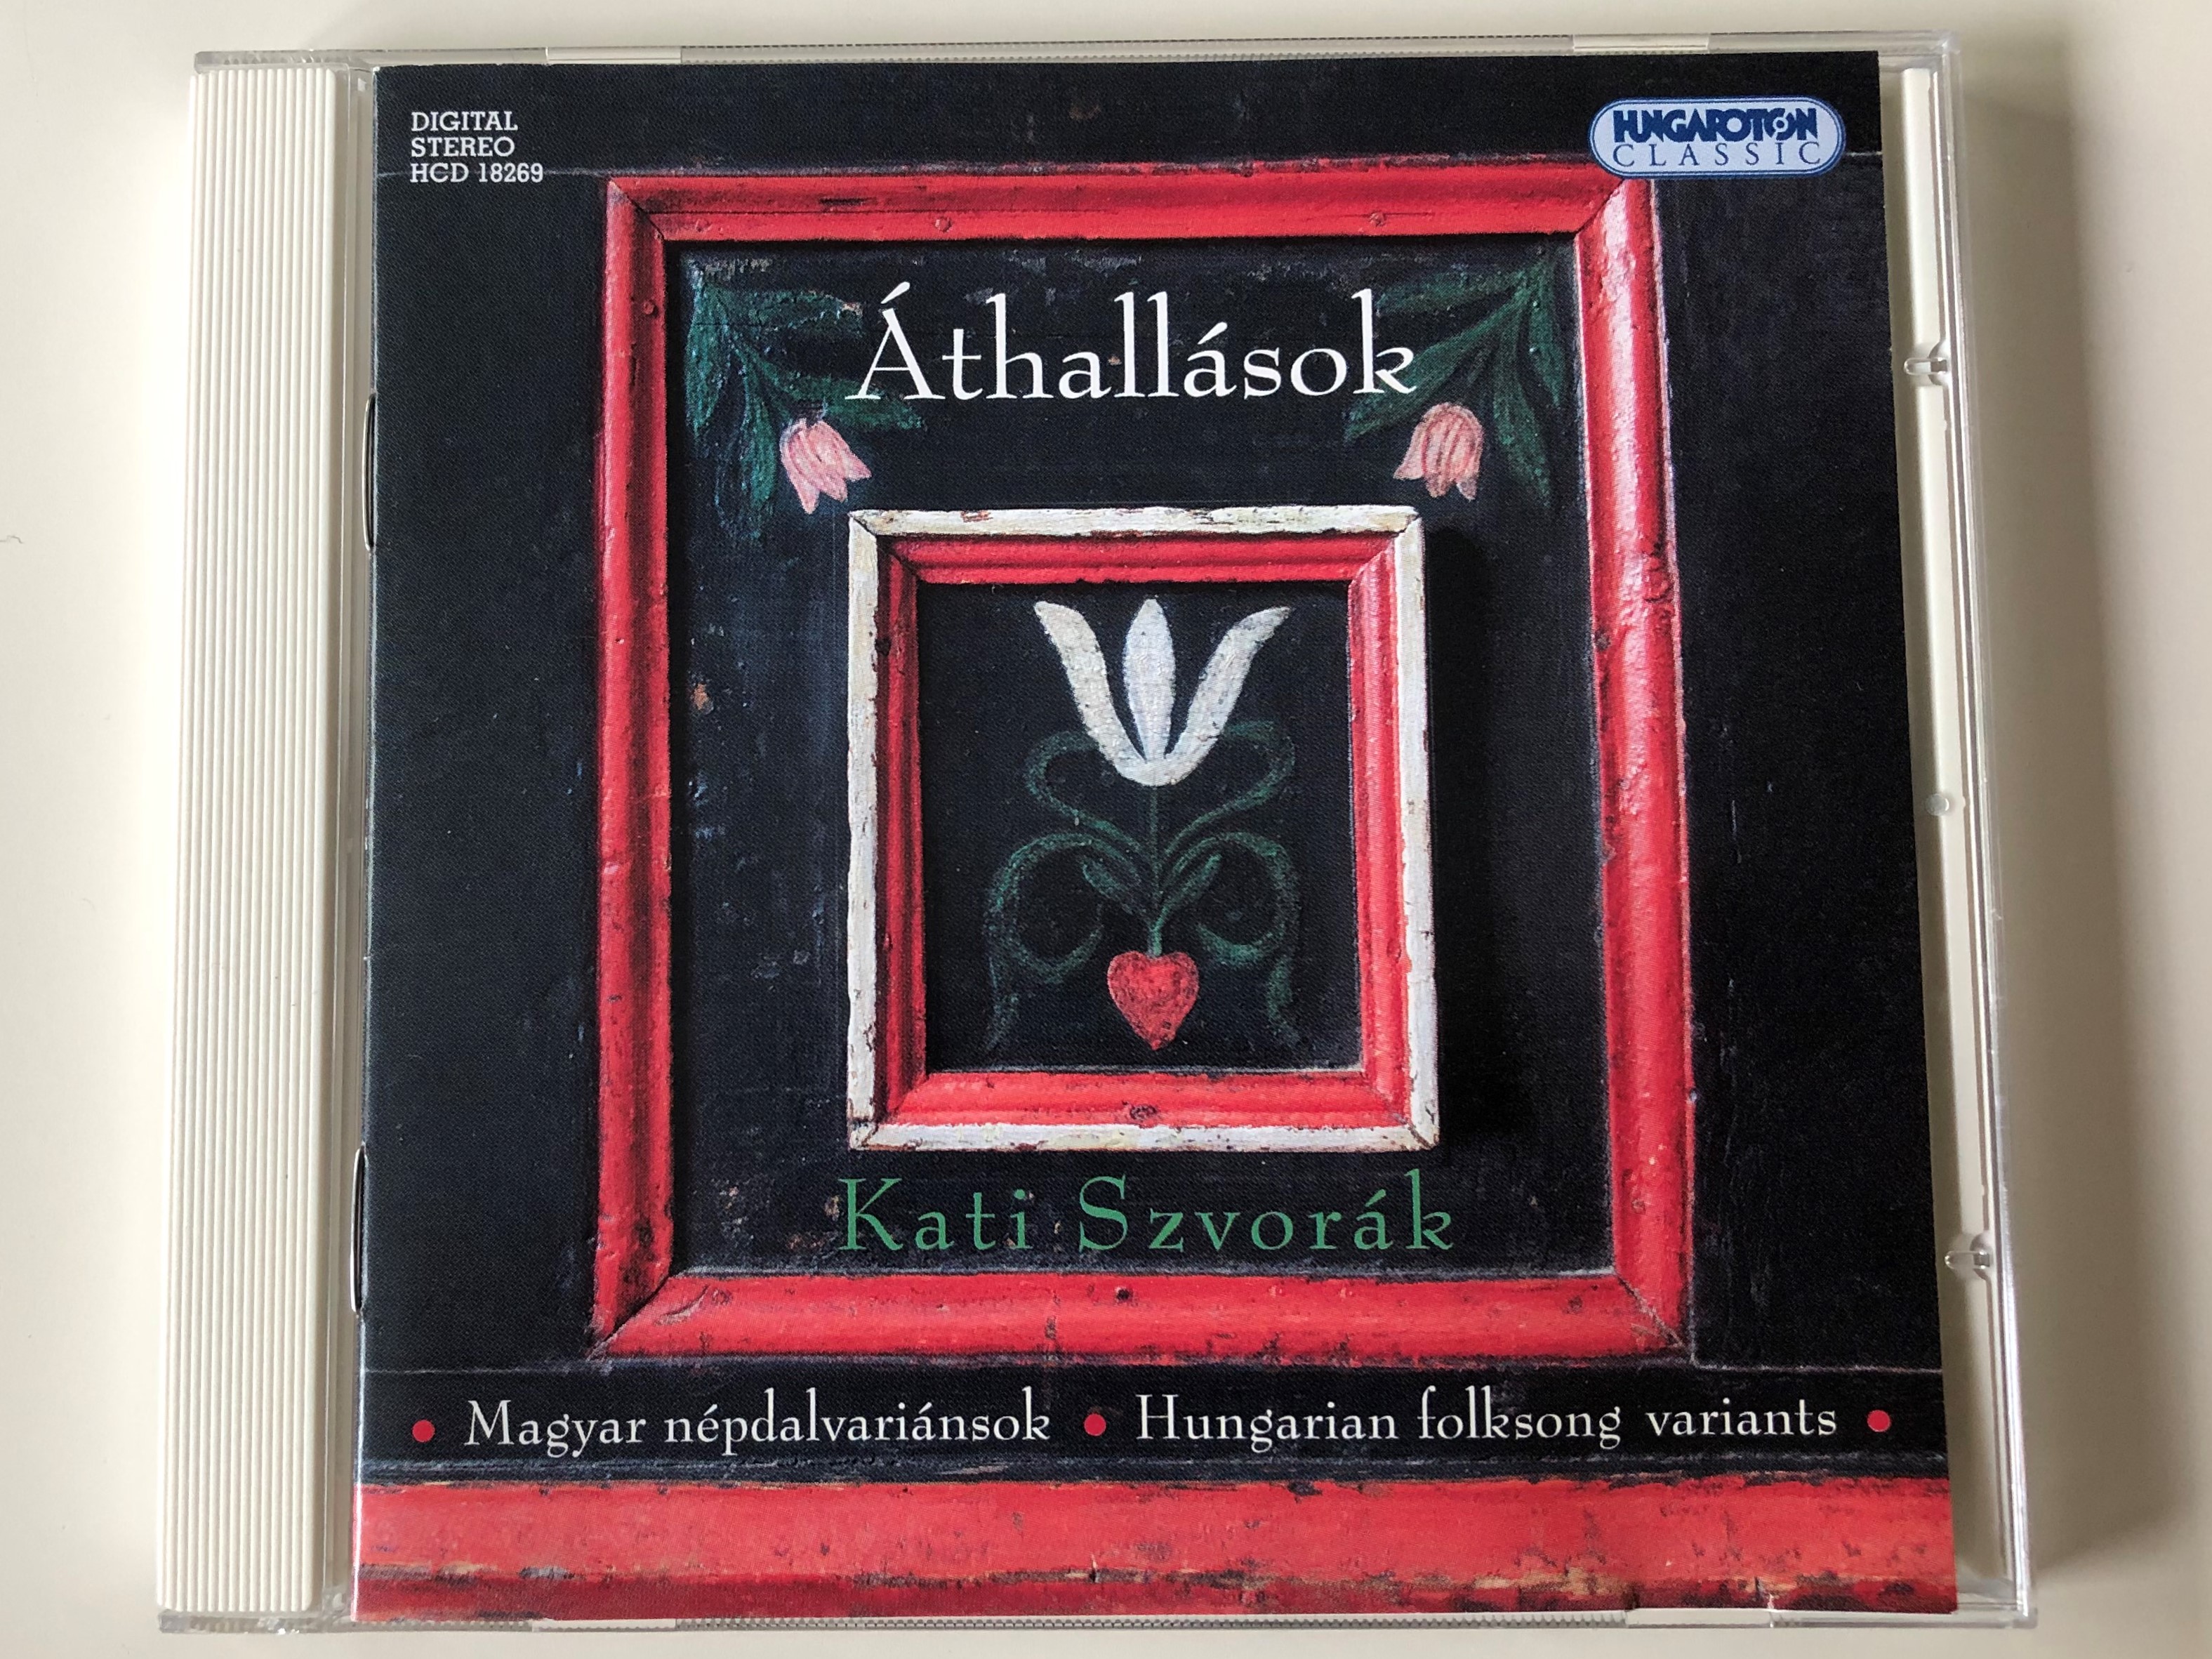 -thall-sok-kati-szvor-k-magyar-n-pdalvari-nsok-hungarian-folksong-variants-hungaroton-classic-audio-cd-2004-stereo-hcd-18269-1-.jpg